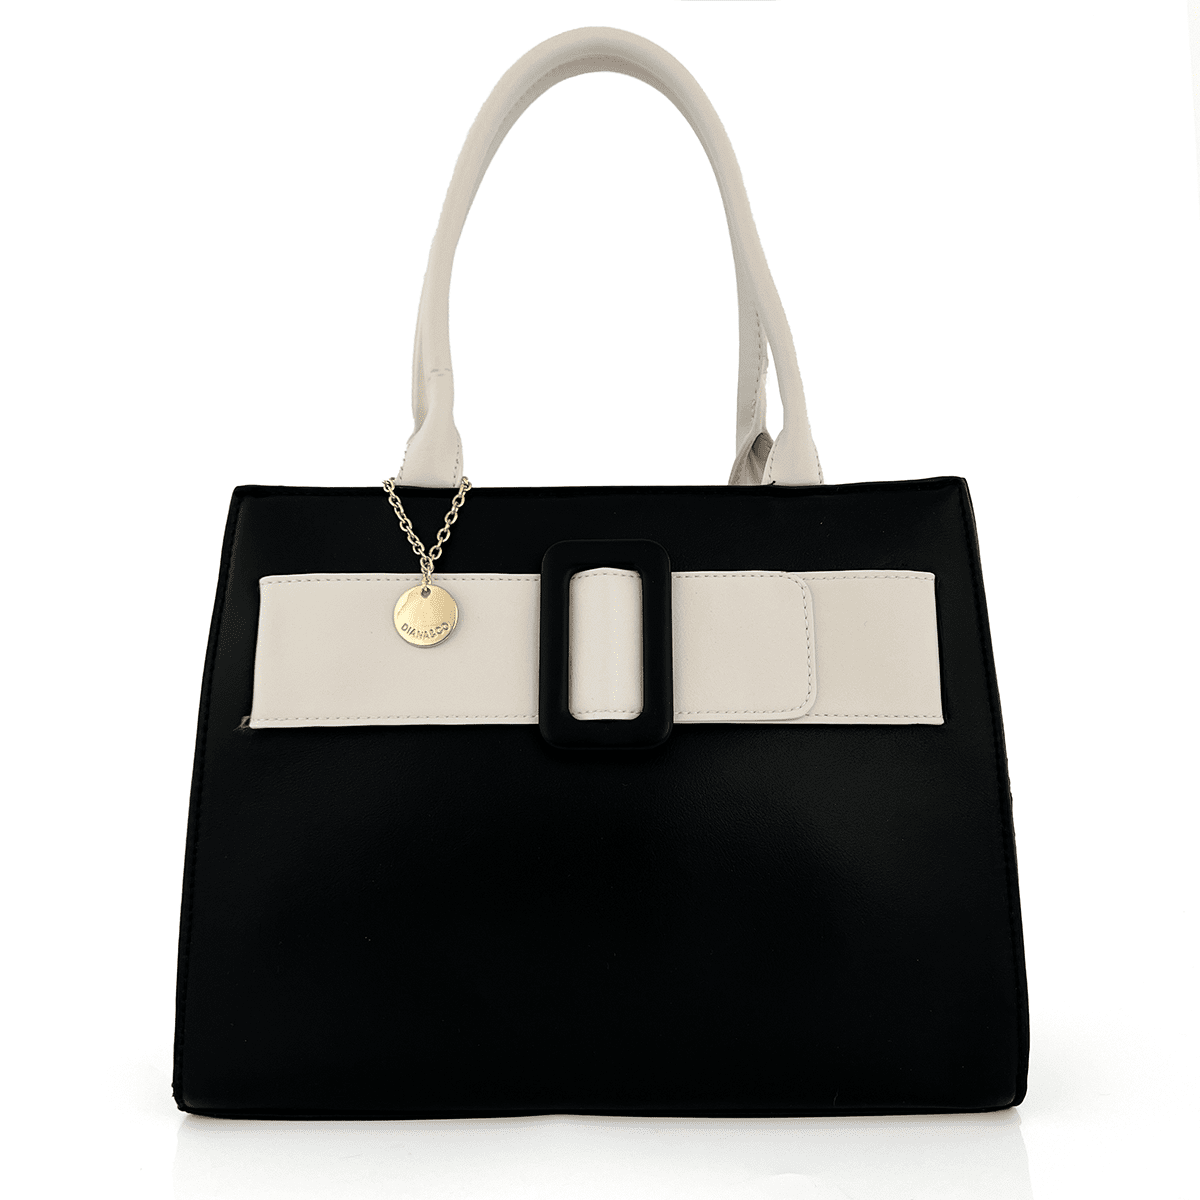 Diana & Co - Луксозна дамска чанта - черно/бяло